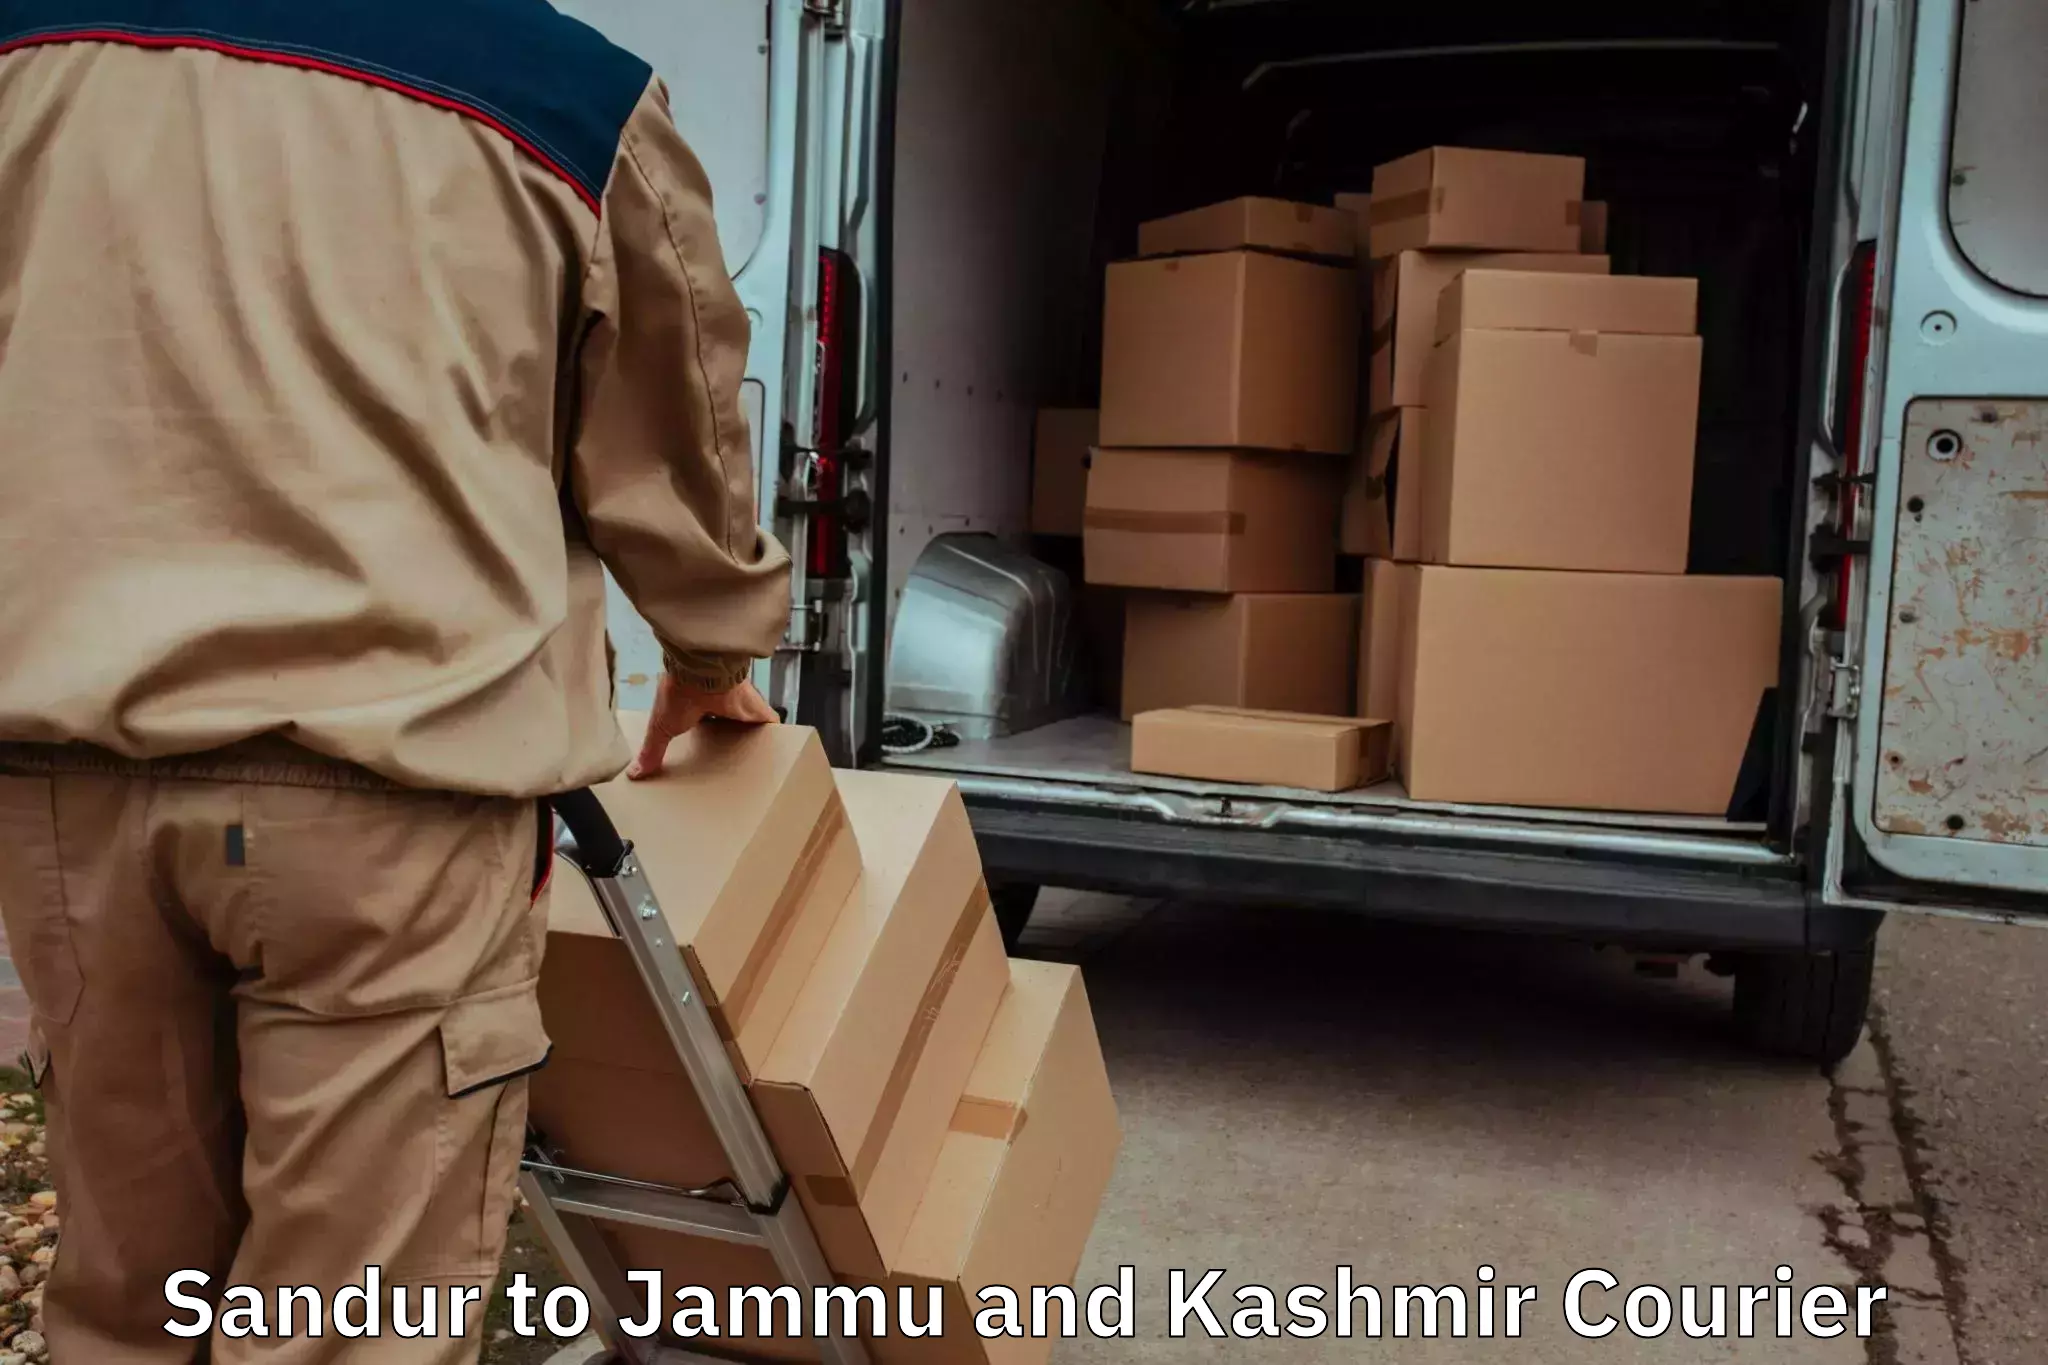 Trusted home movers Sandur to Srinagar Kashmir